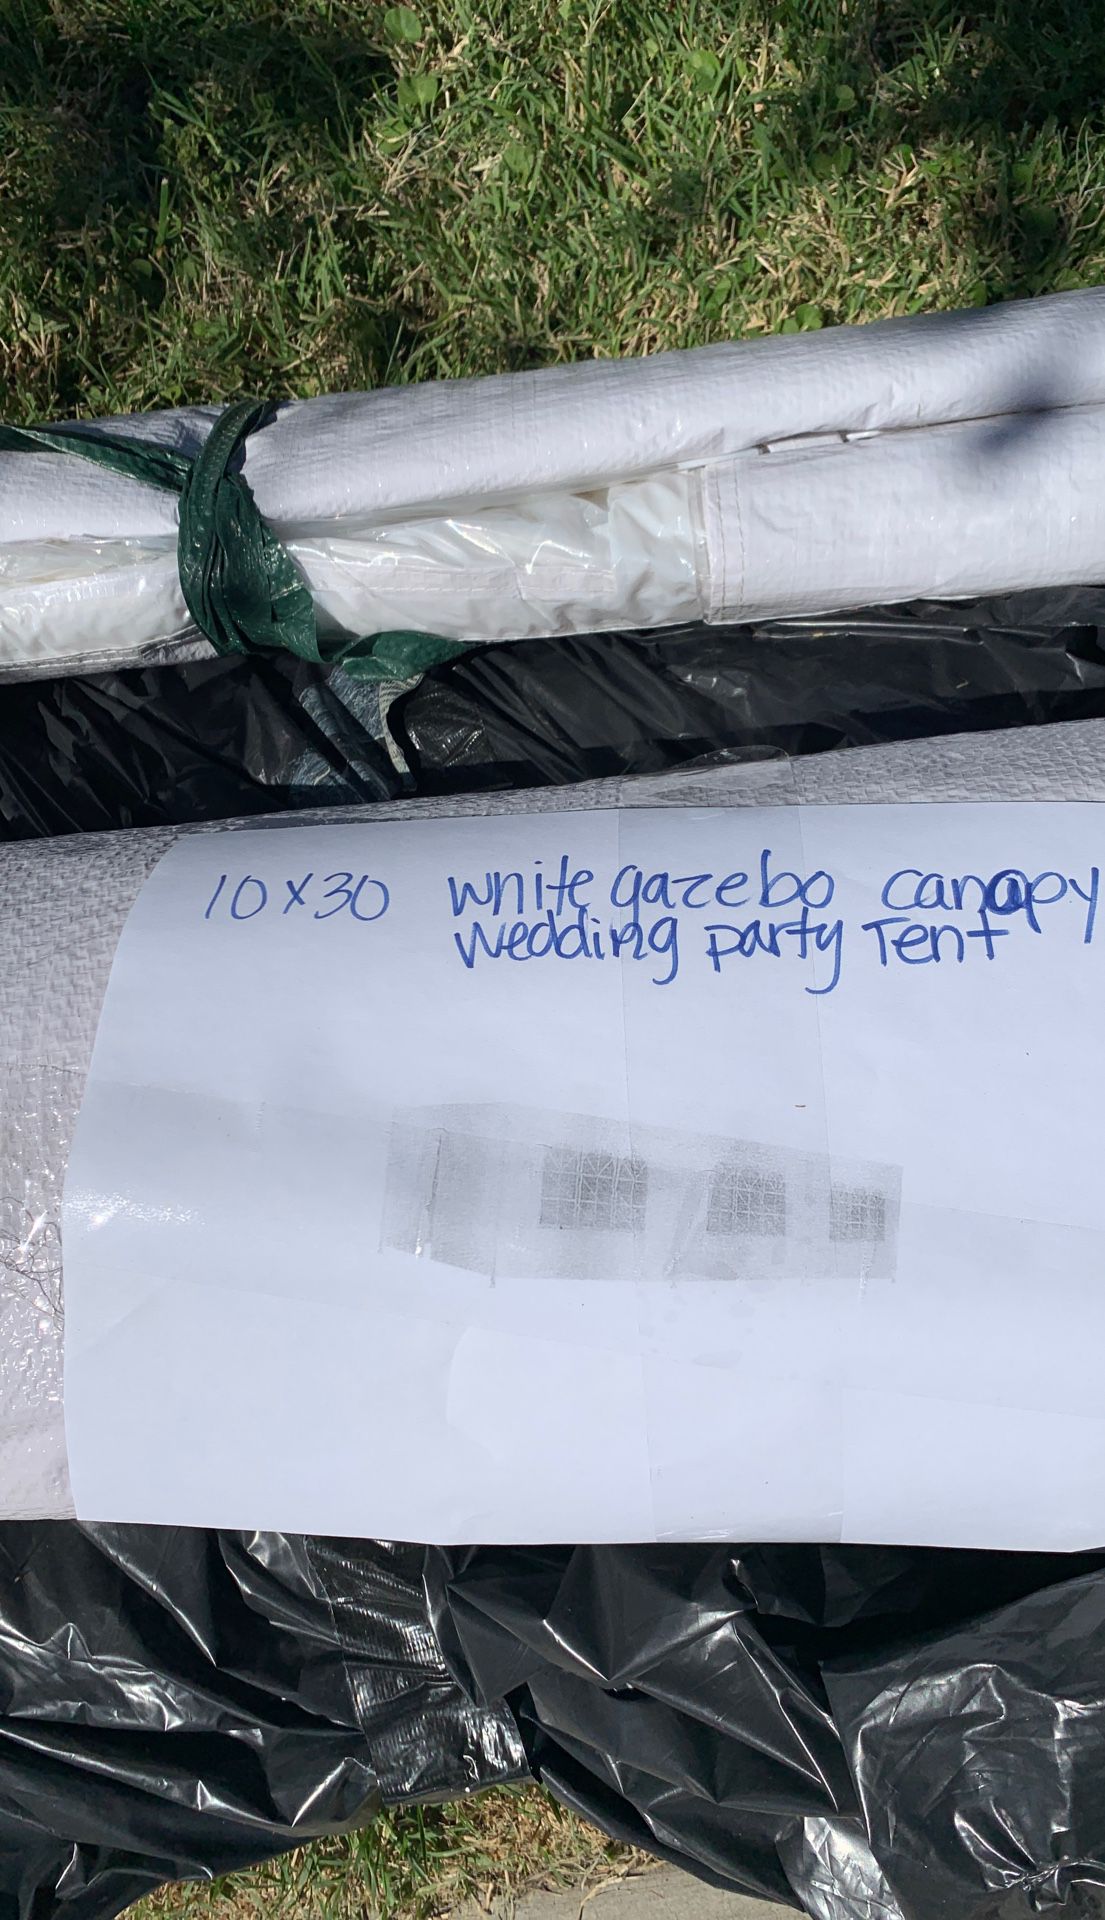 White gazebo CANAPY 10x30 Wedding Party Tent